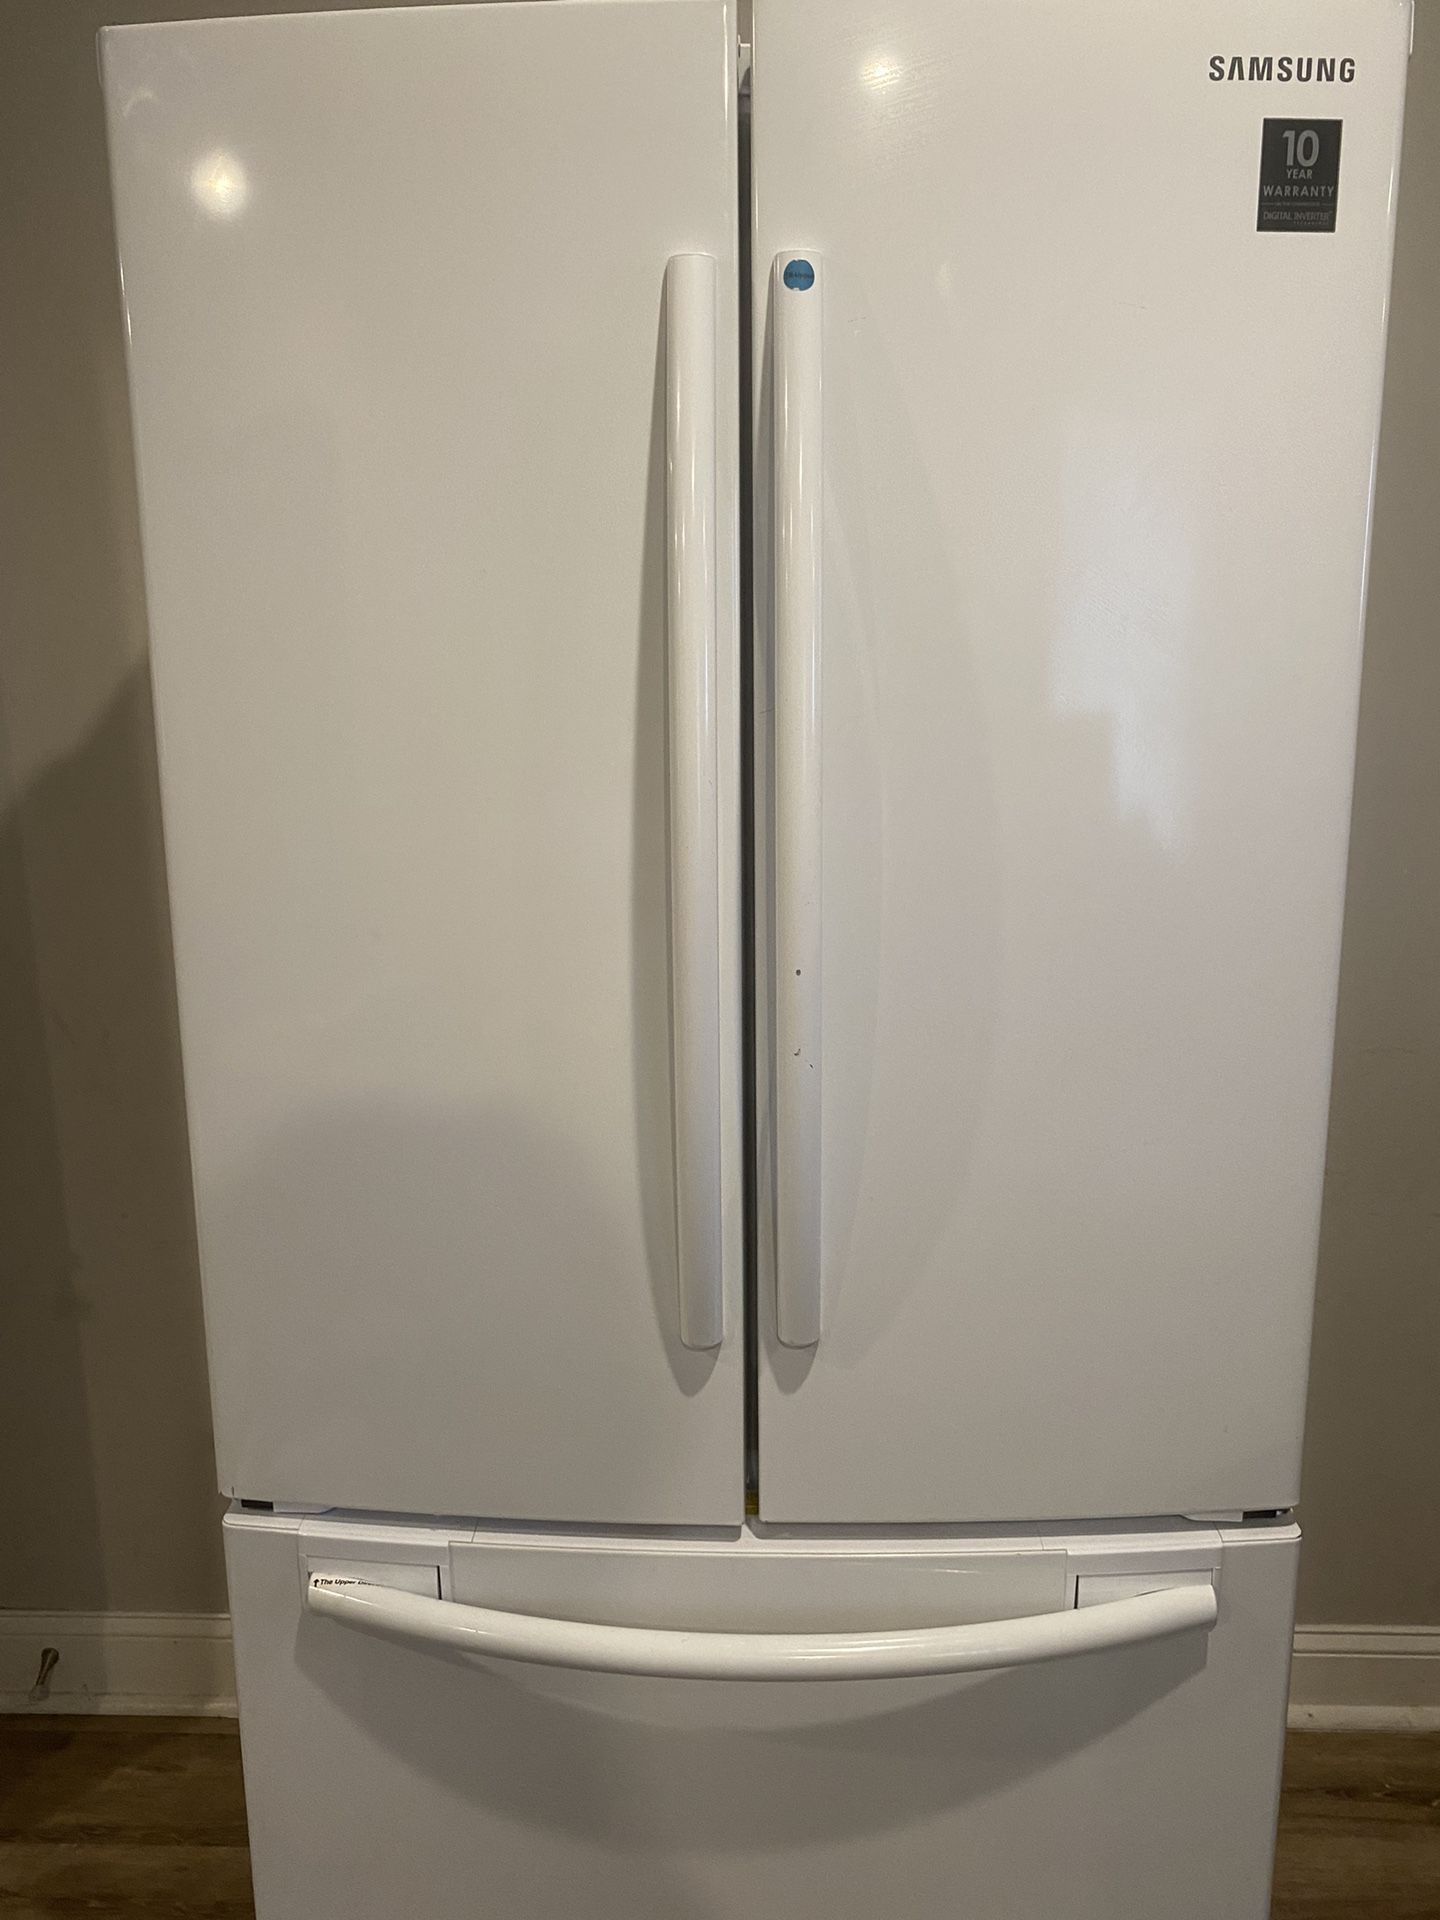 Samsang  refrigerator With Freezer At The Bottom 